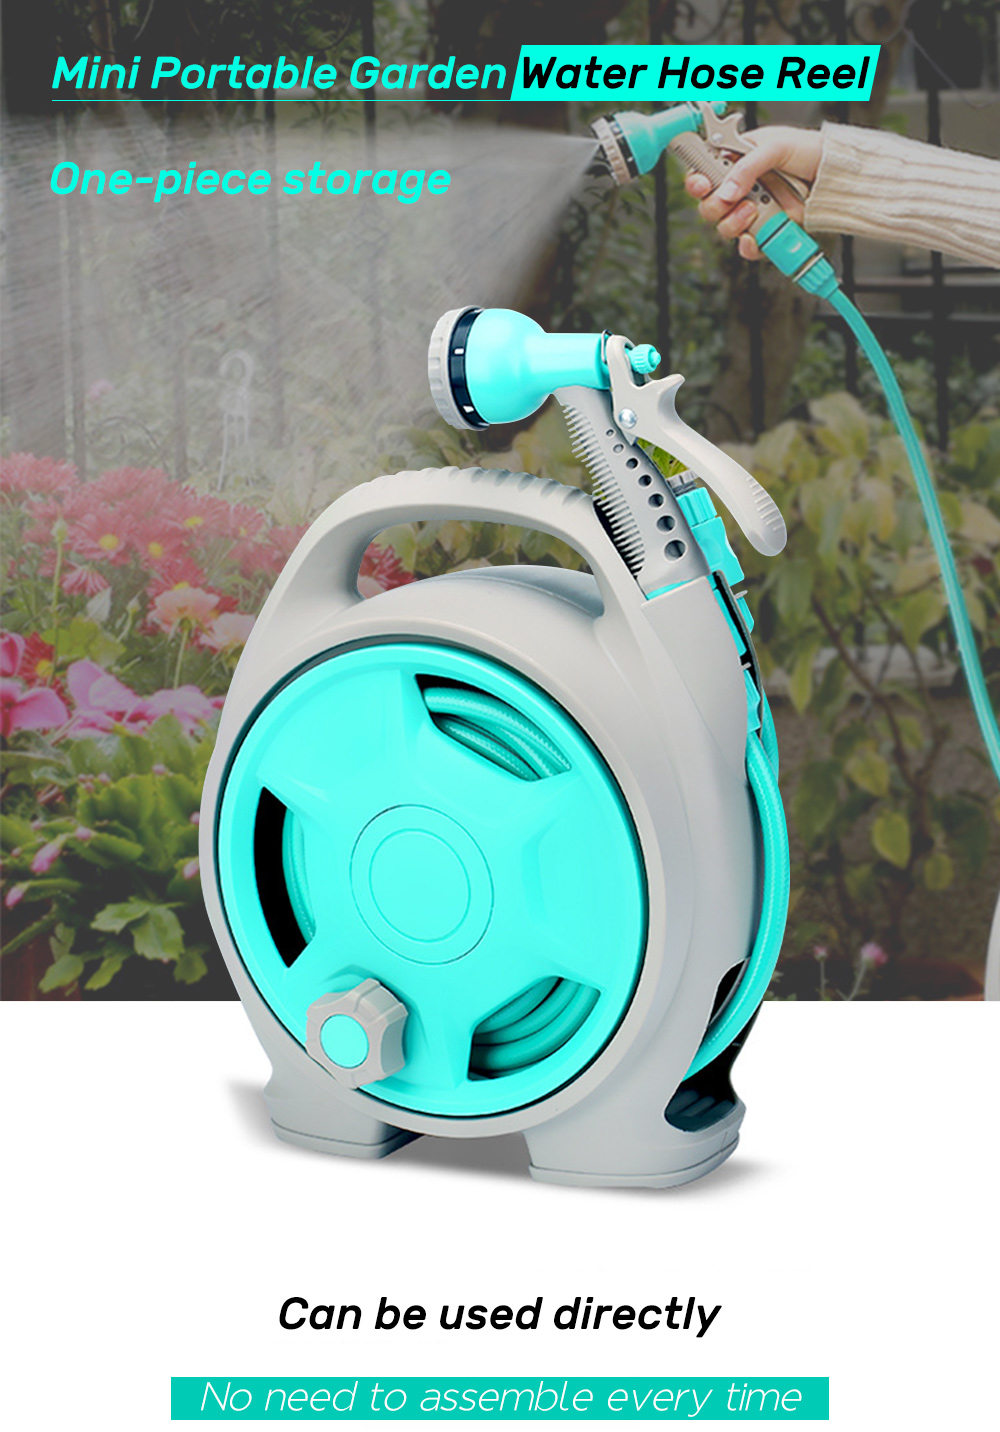 Mini Portable Garden Water Hose Reel